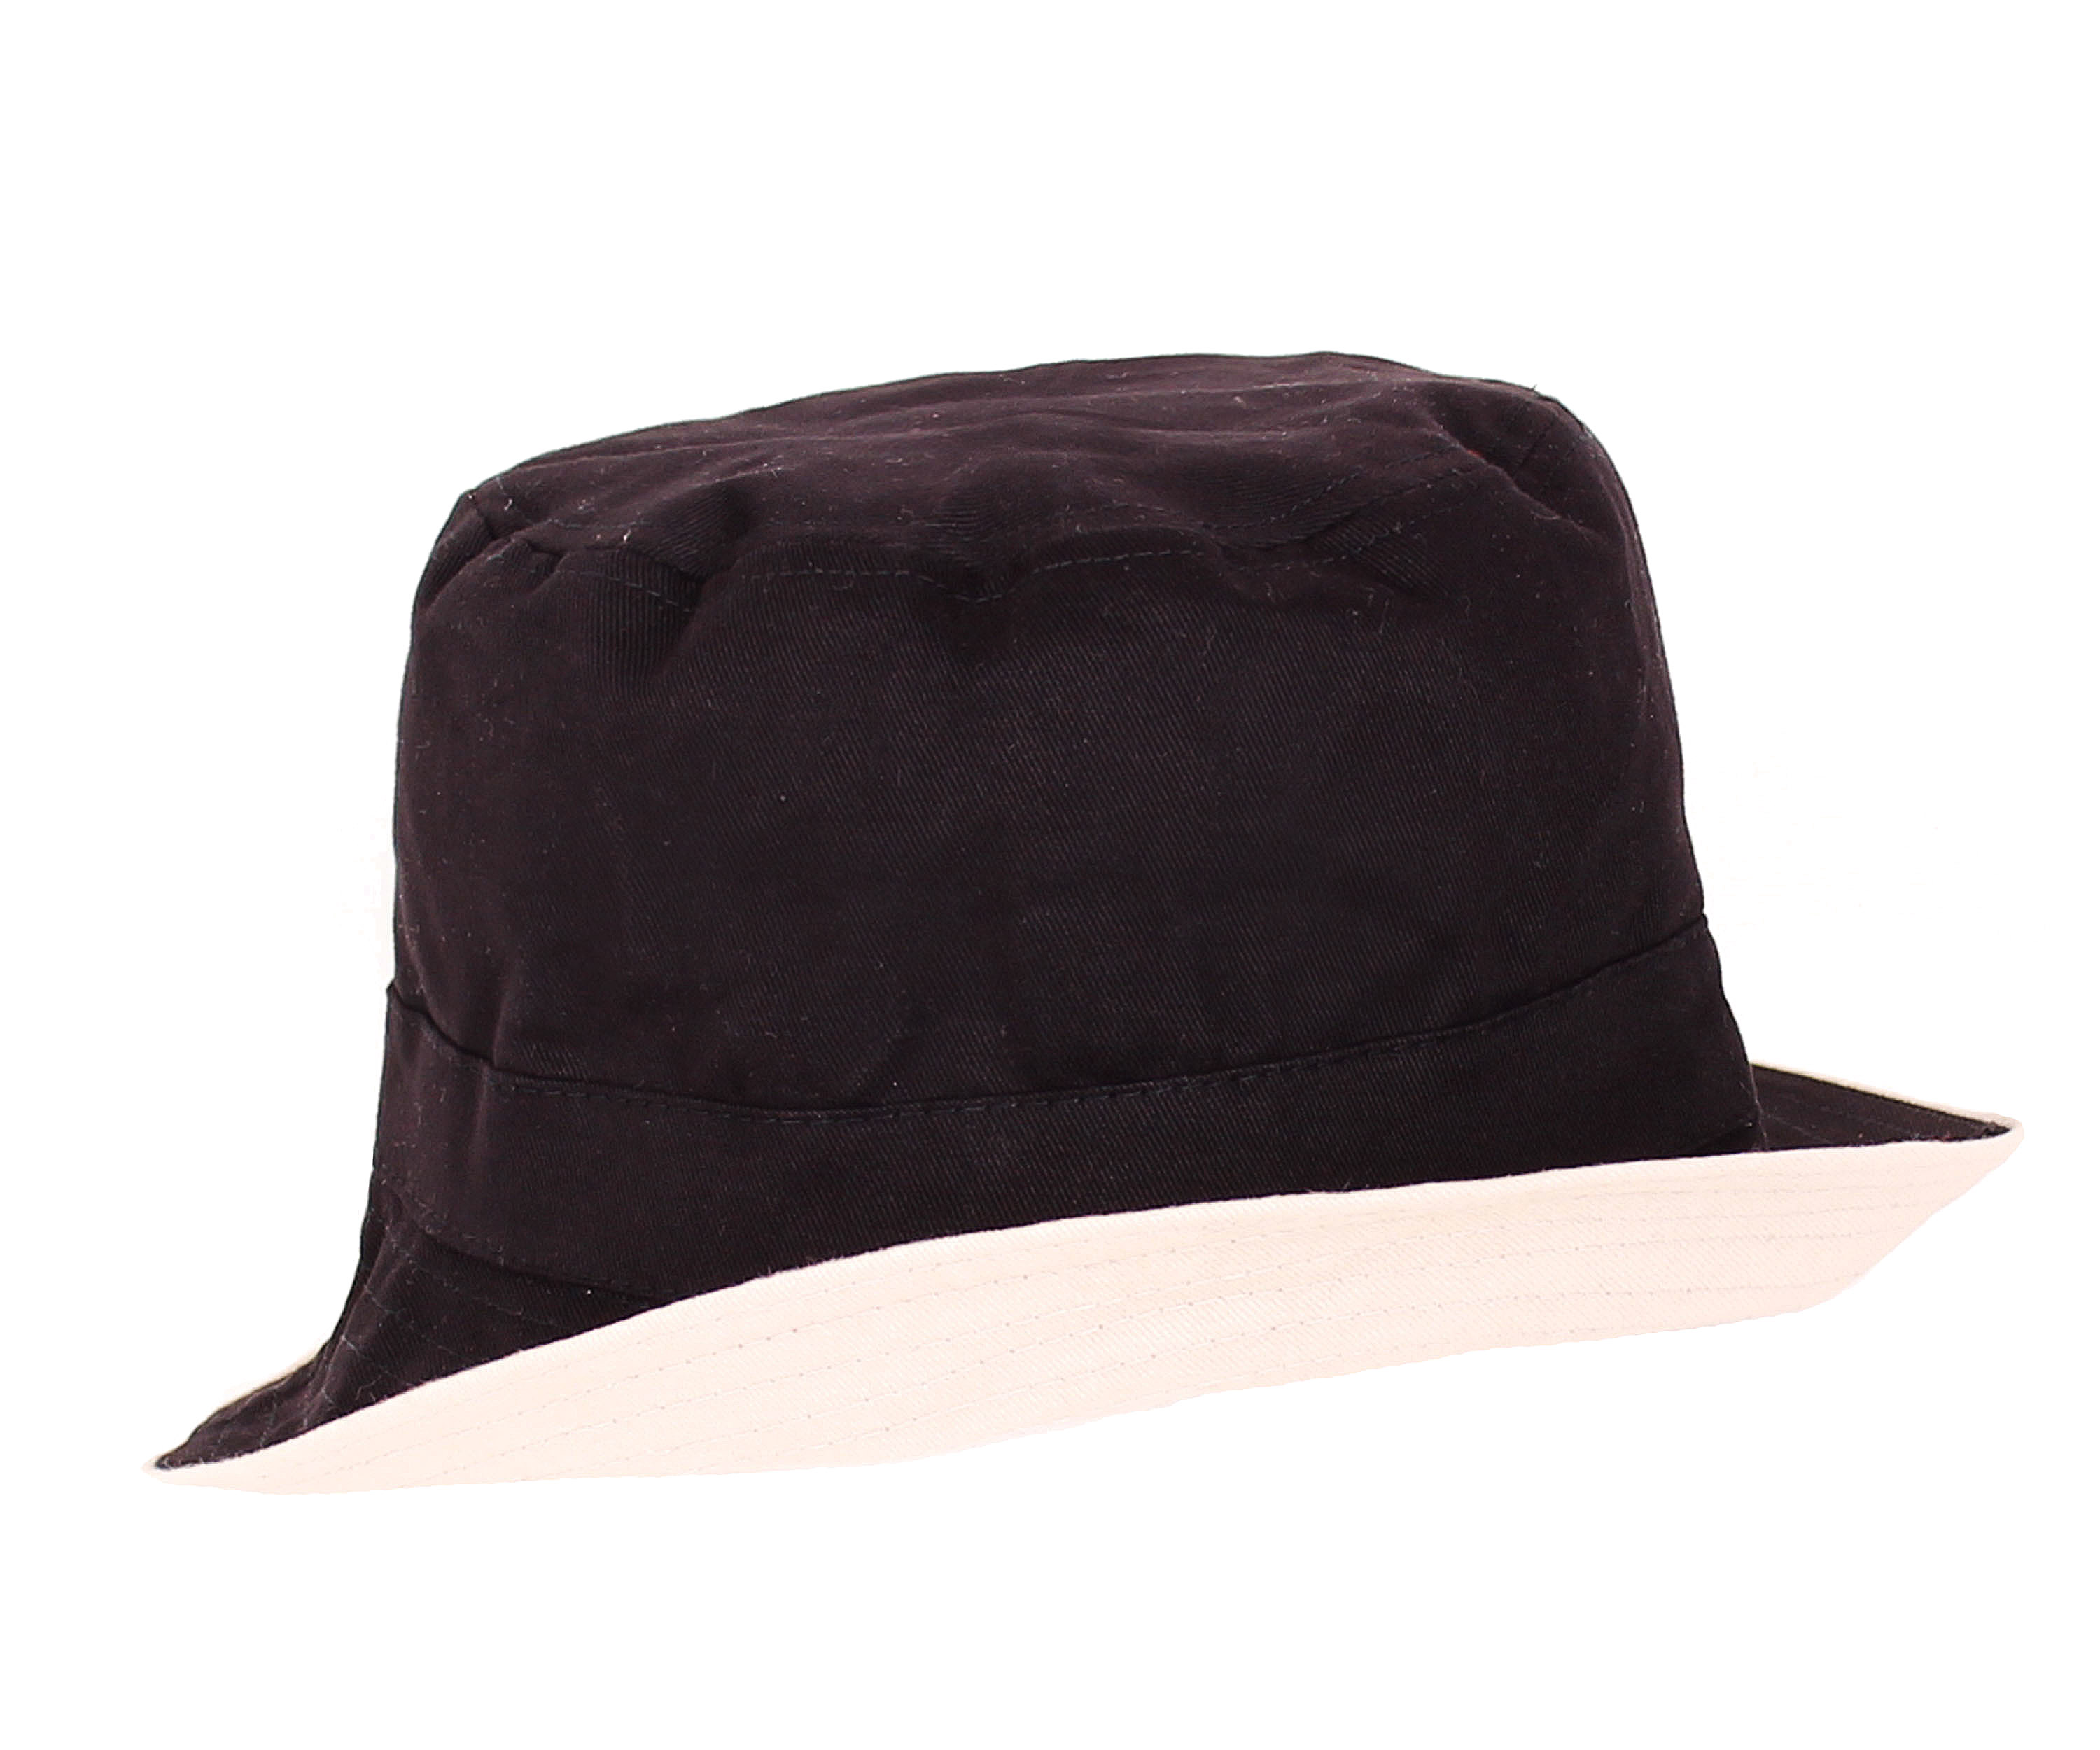 Vampire Diaries Hats & Caps - Panama Bucket Hip Hop Summer Fishing Hats